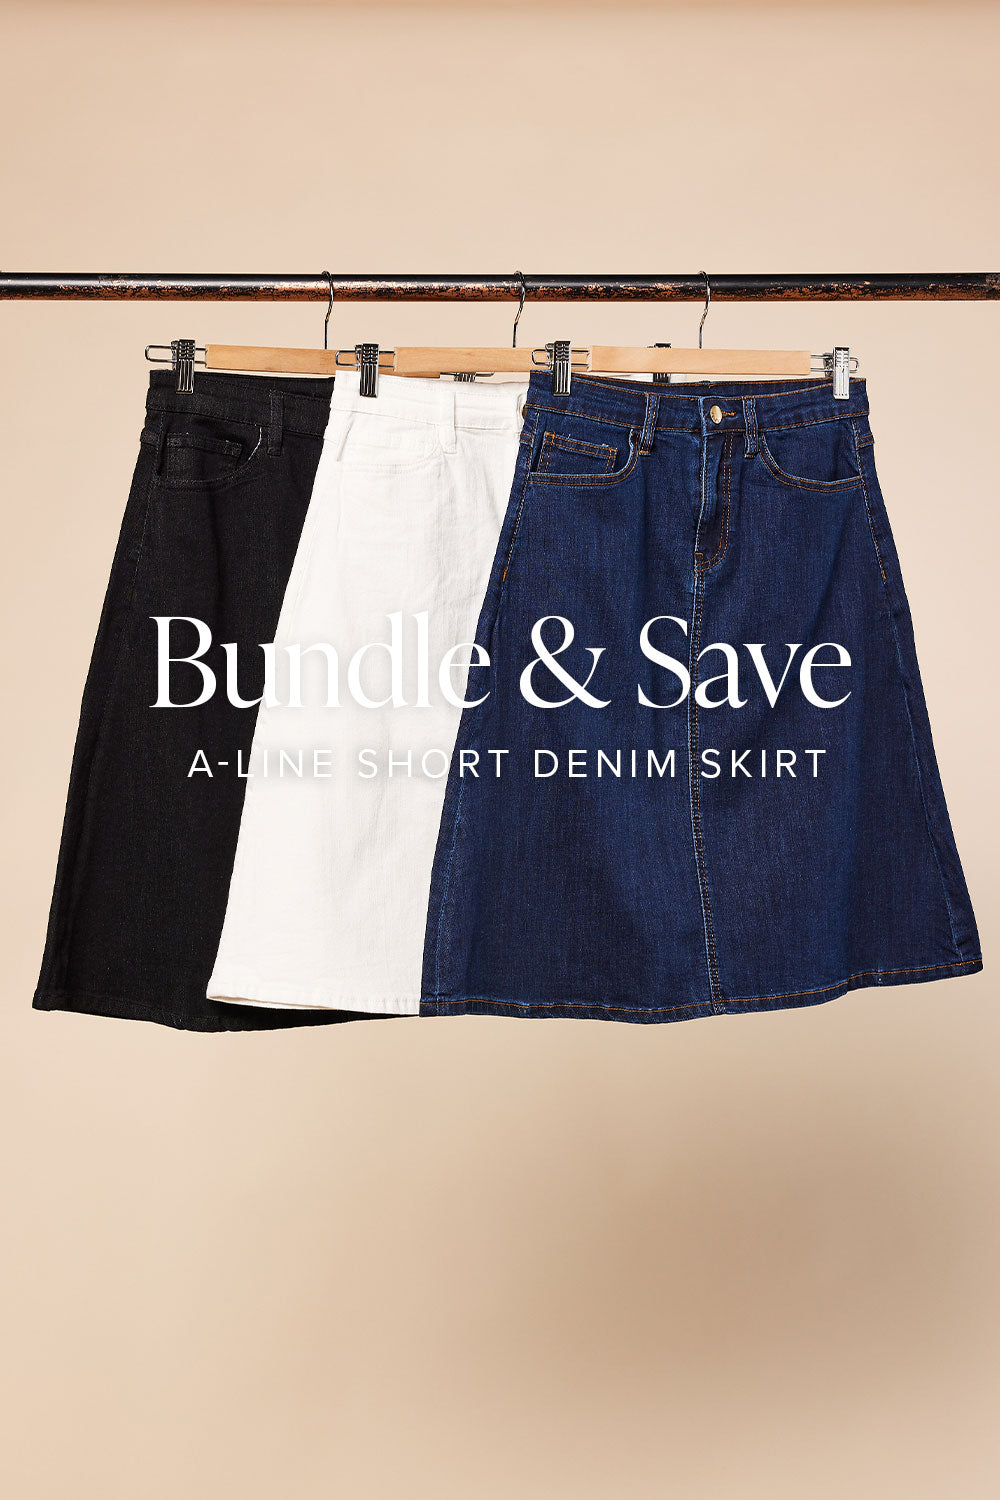 Classic A-Line Short Denim Skirt Bundle